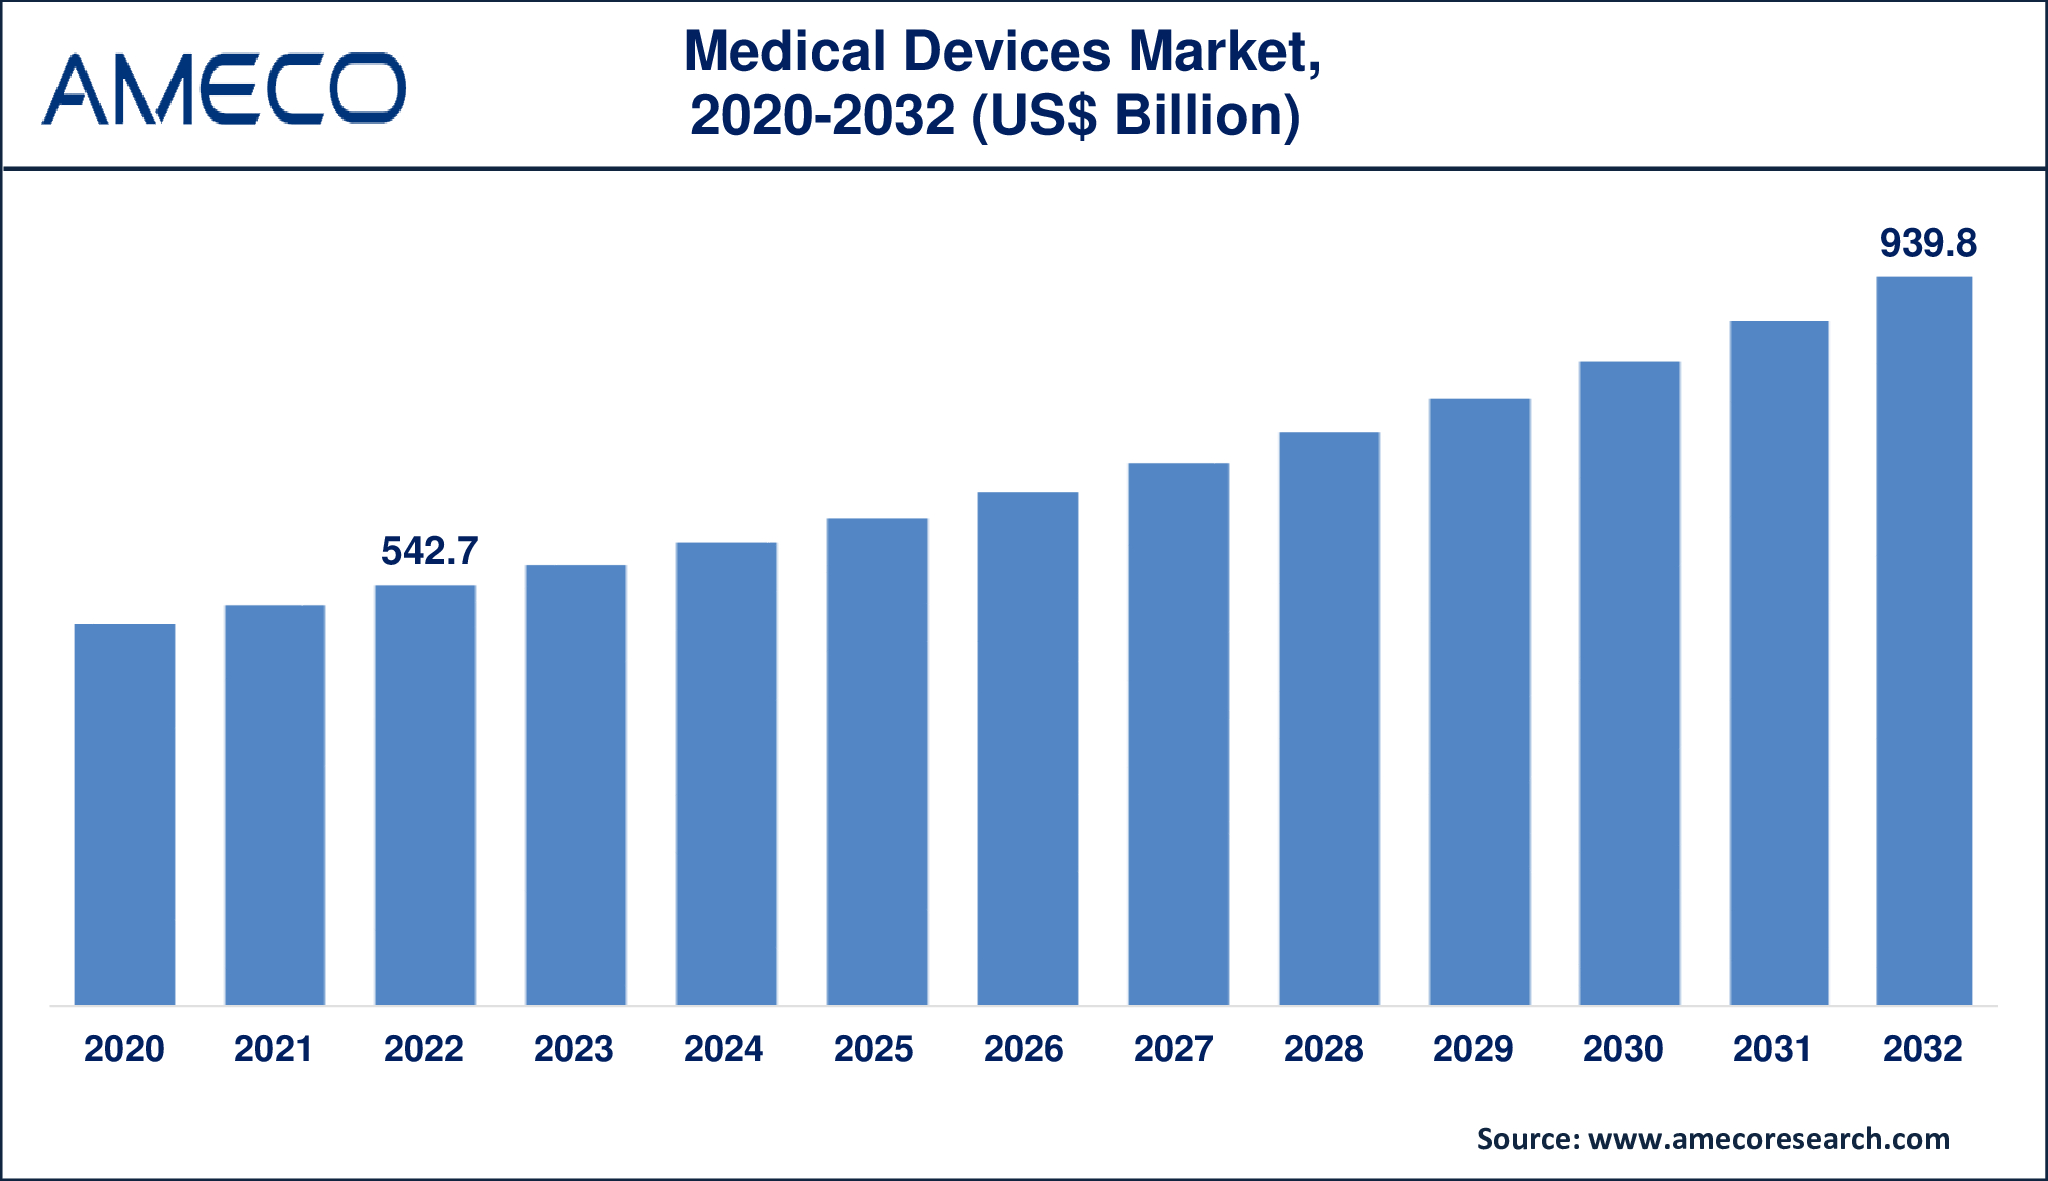 Medical Devices Market Dynamics